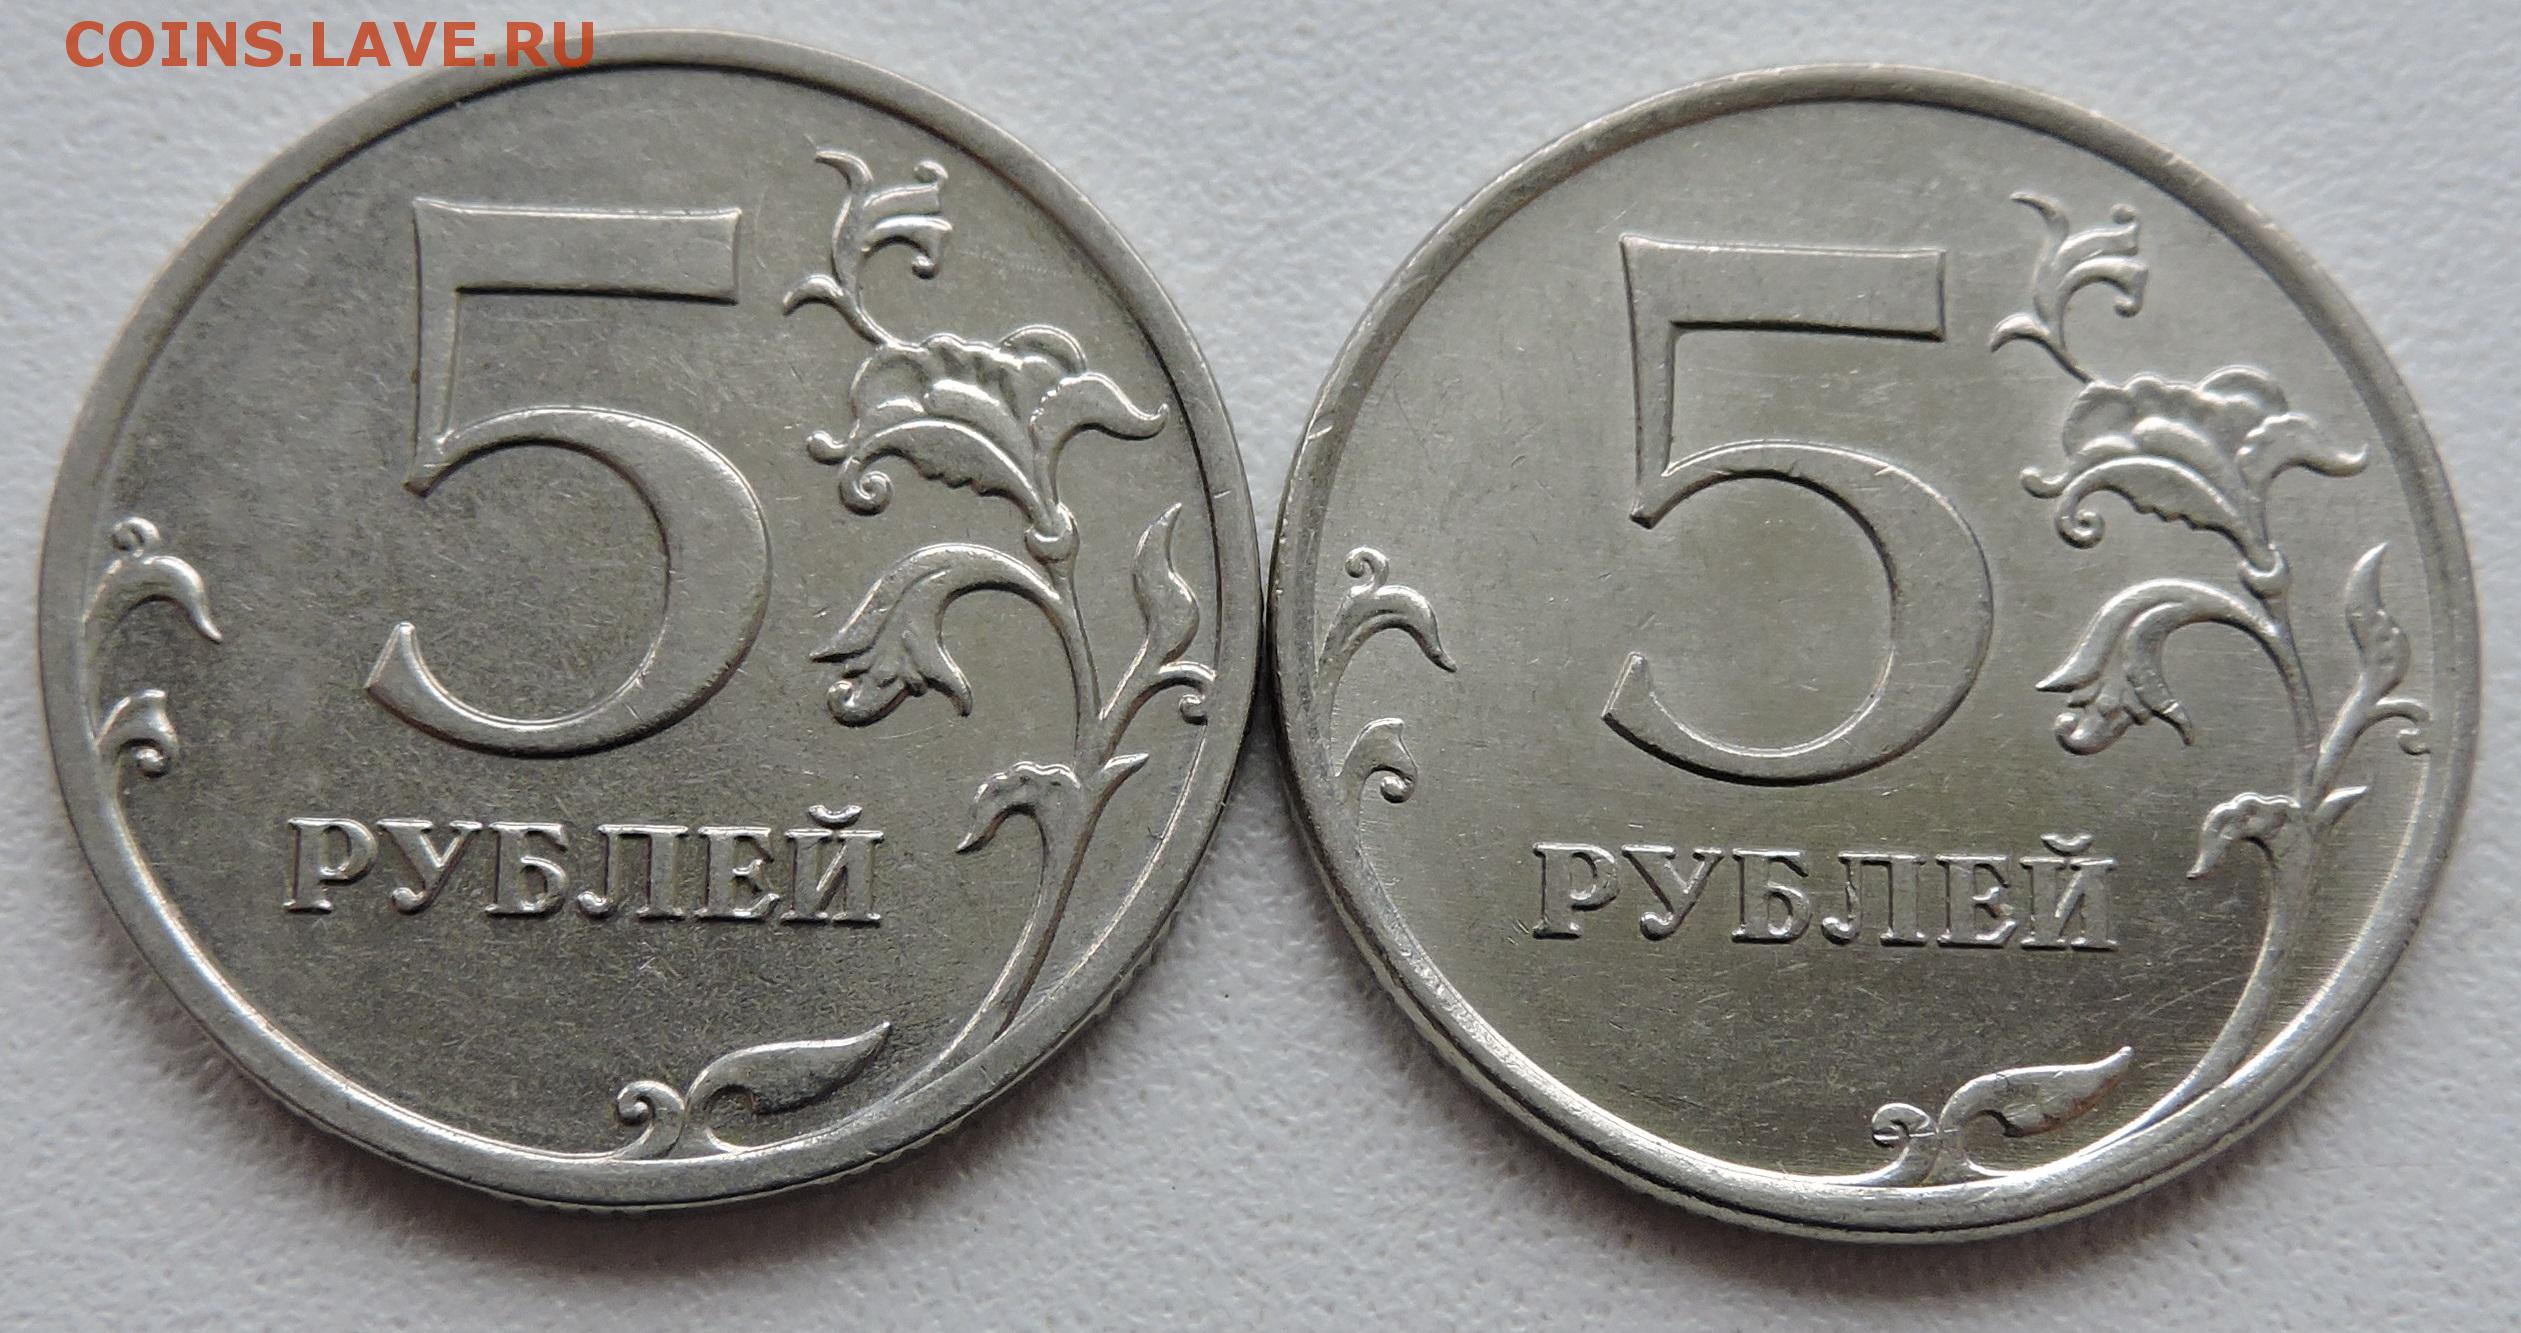 75 рублей 80. 5 Рублей 1998 ММД шт.а1 и шт.а2. 5 Рублей 2008 ММД. Монета 5 рублей 1998 ММД XF. 5 Рублей 2008 СПМД.